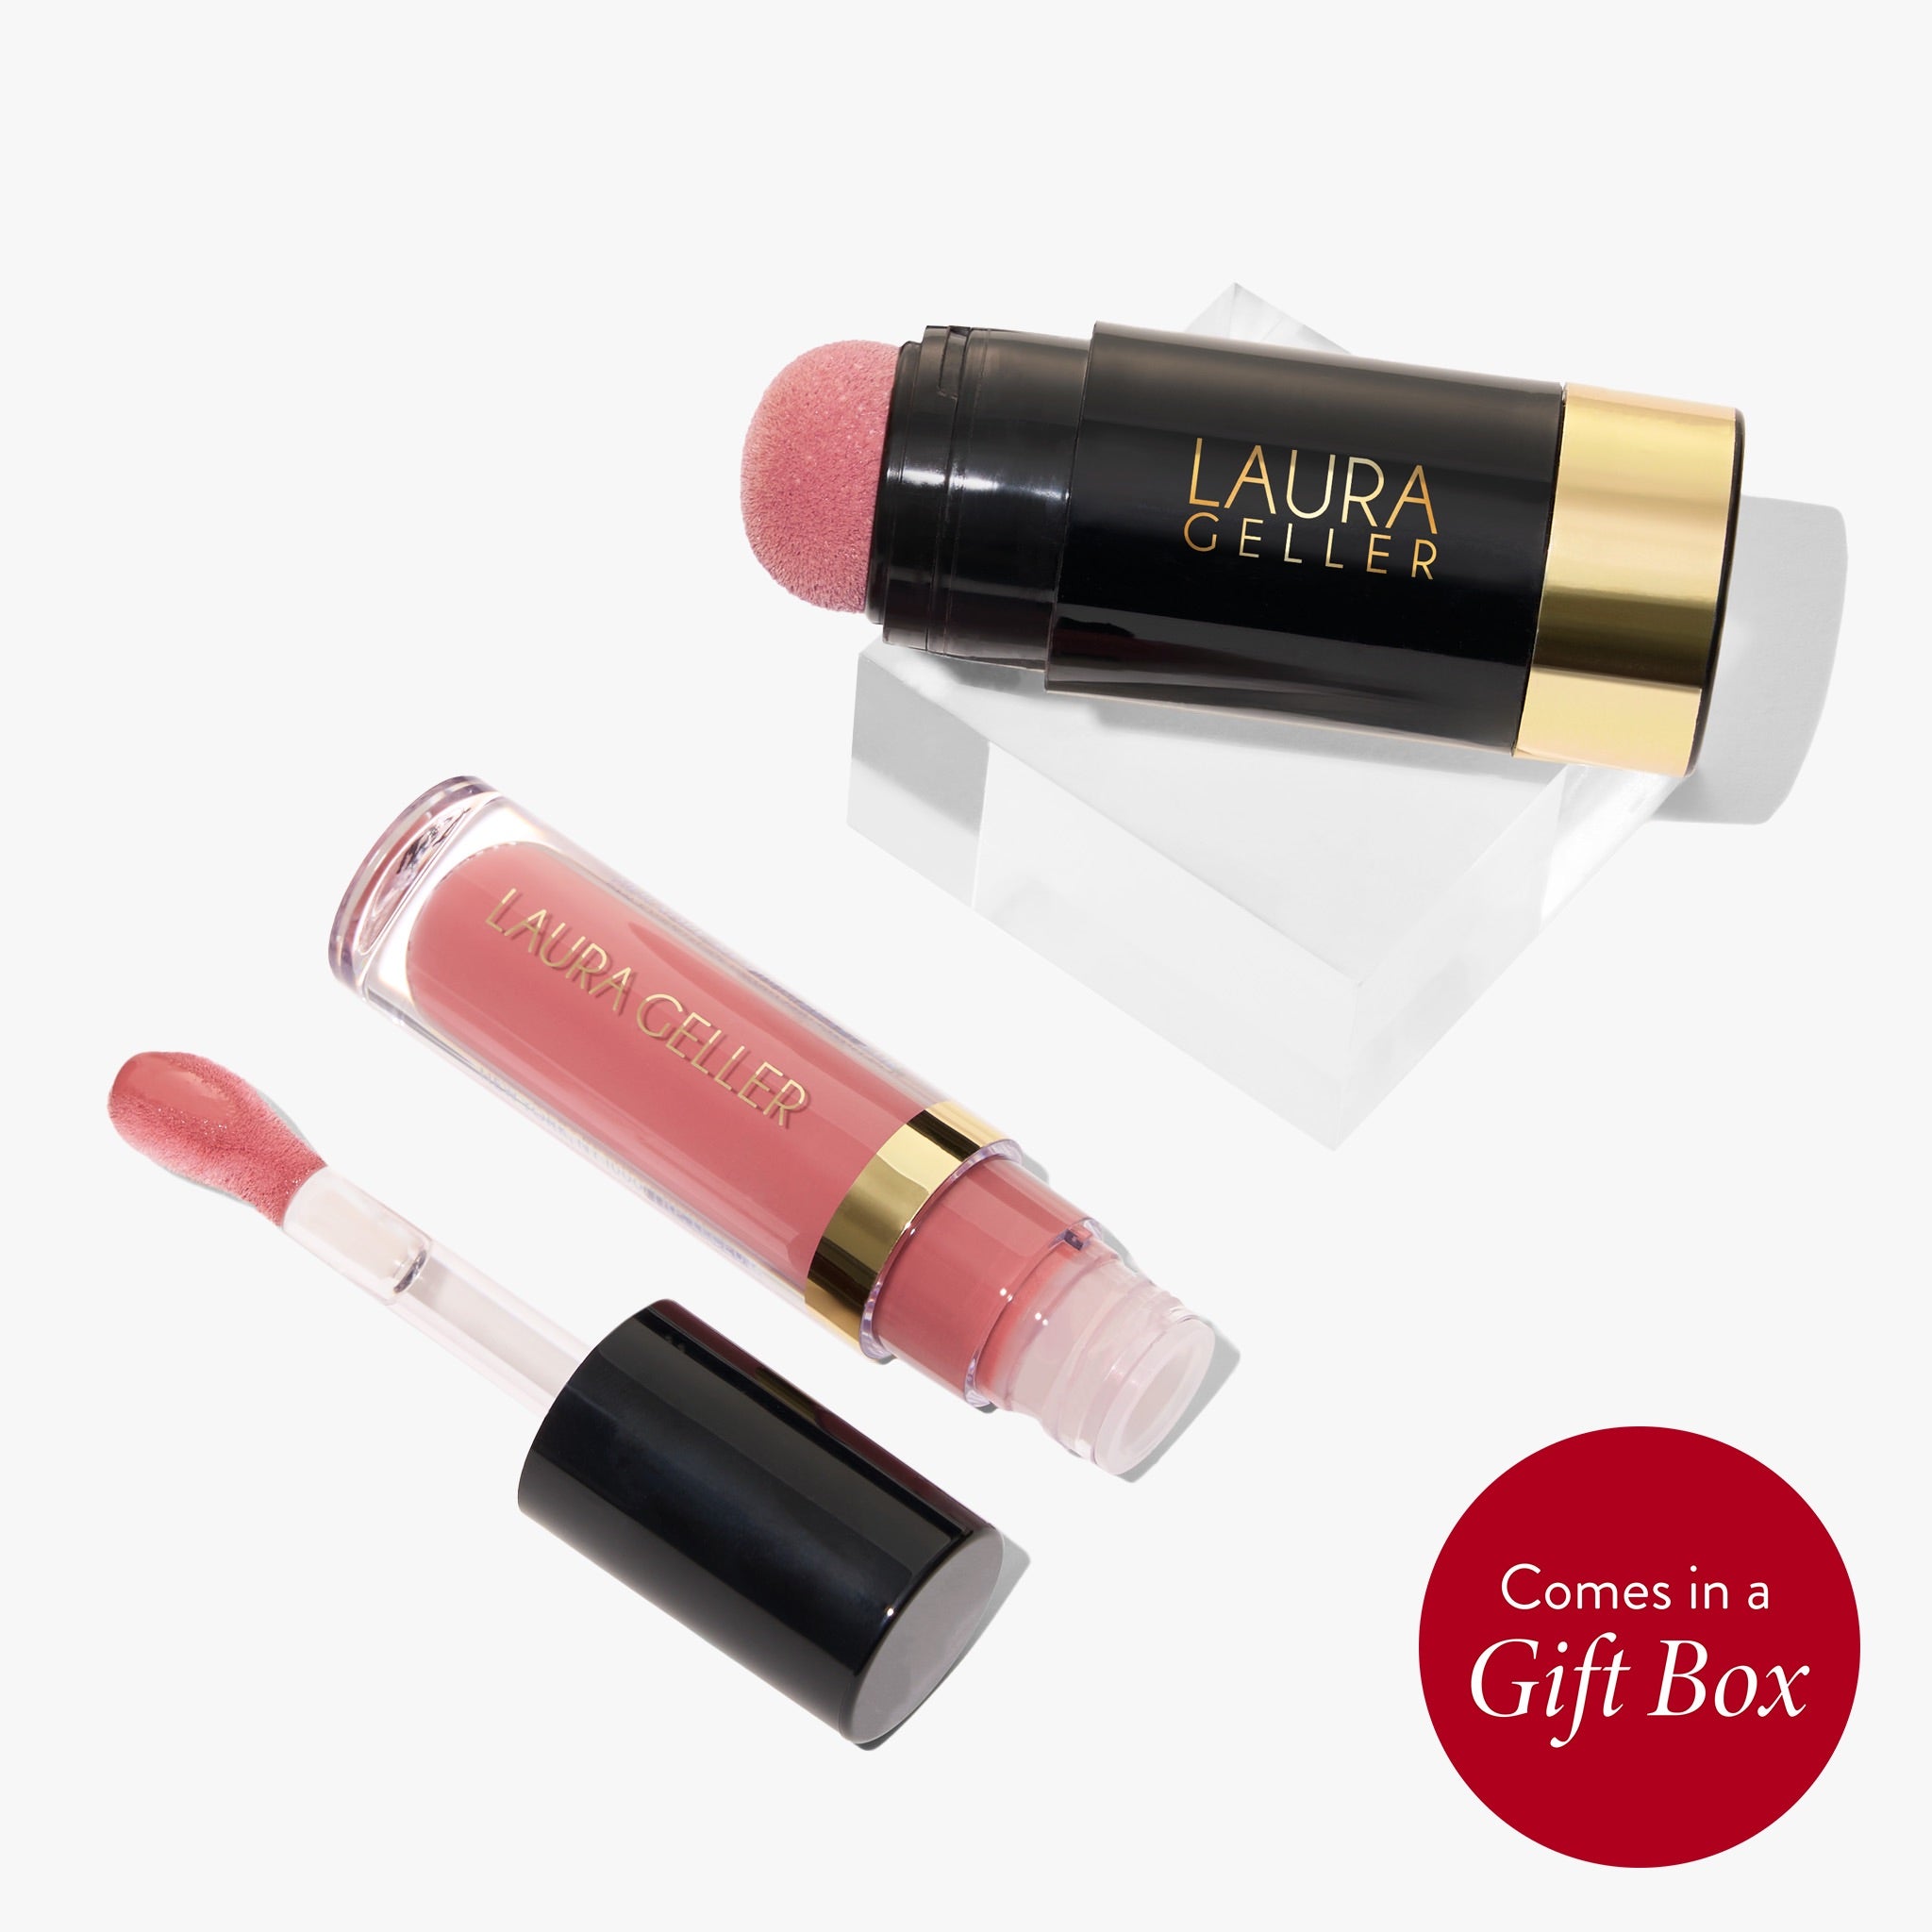 Laura Geller Serum Staples Smooth Blush and Lip Duo GIft Box